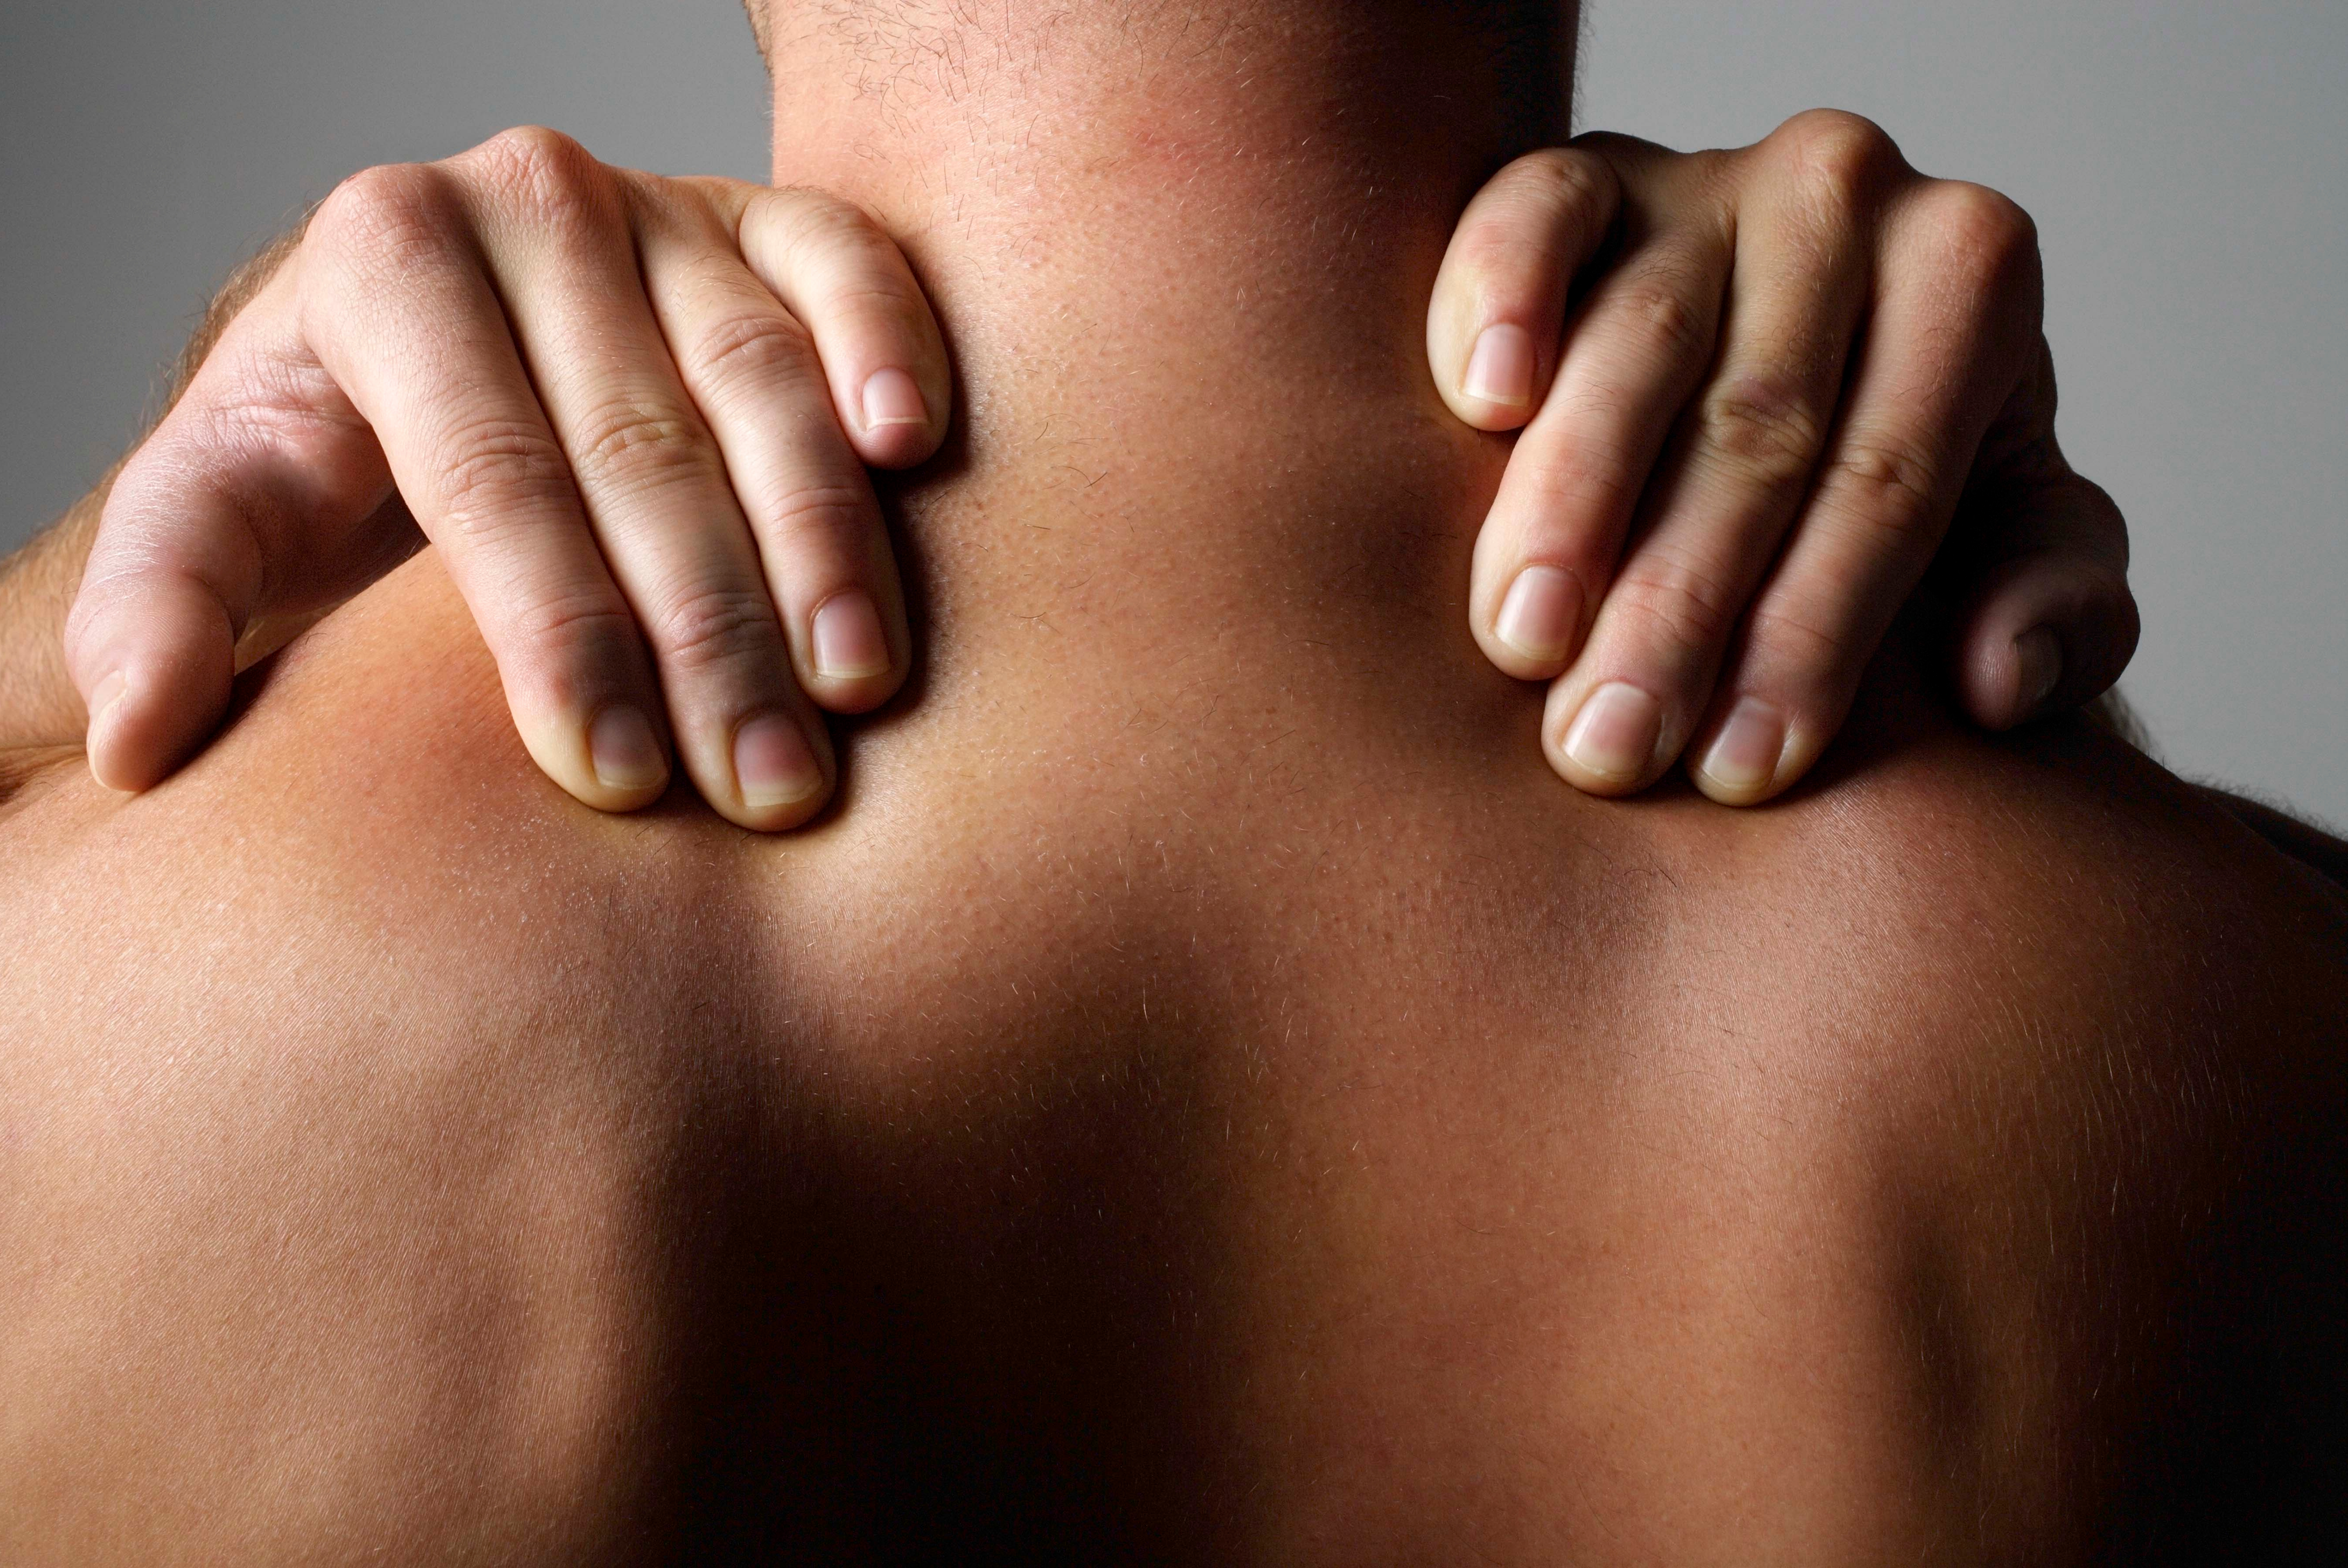 Back, neck and shoulder massage: More than just a back rub